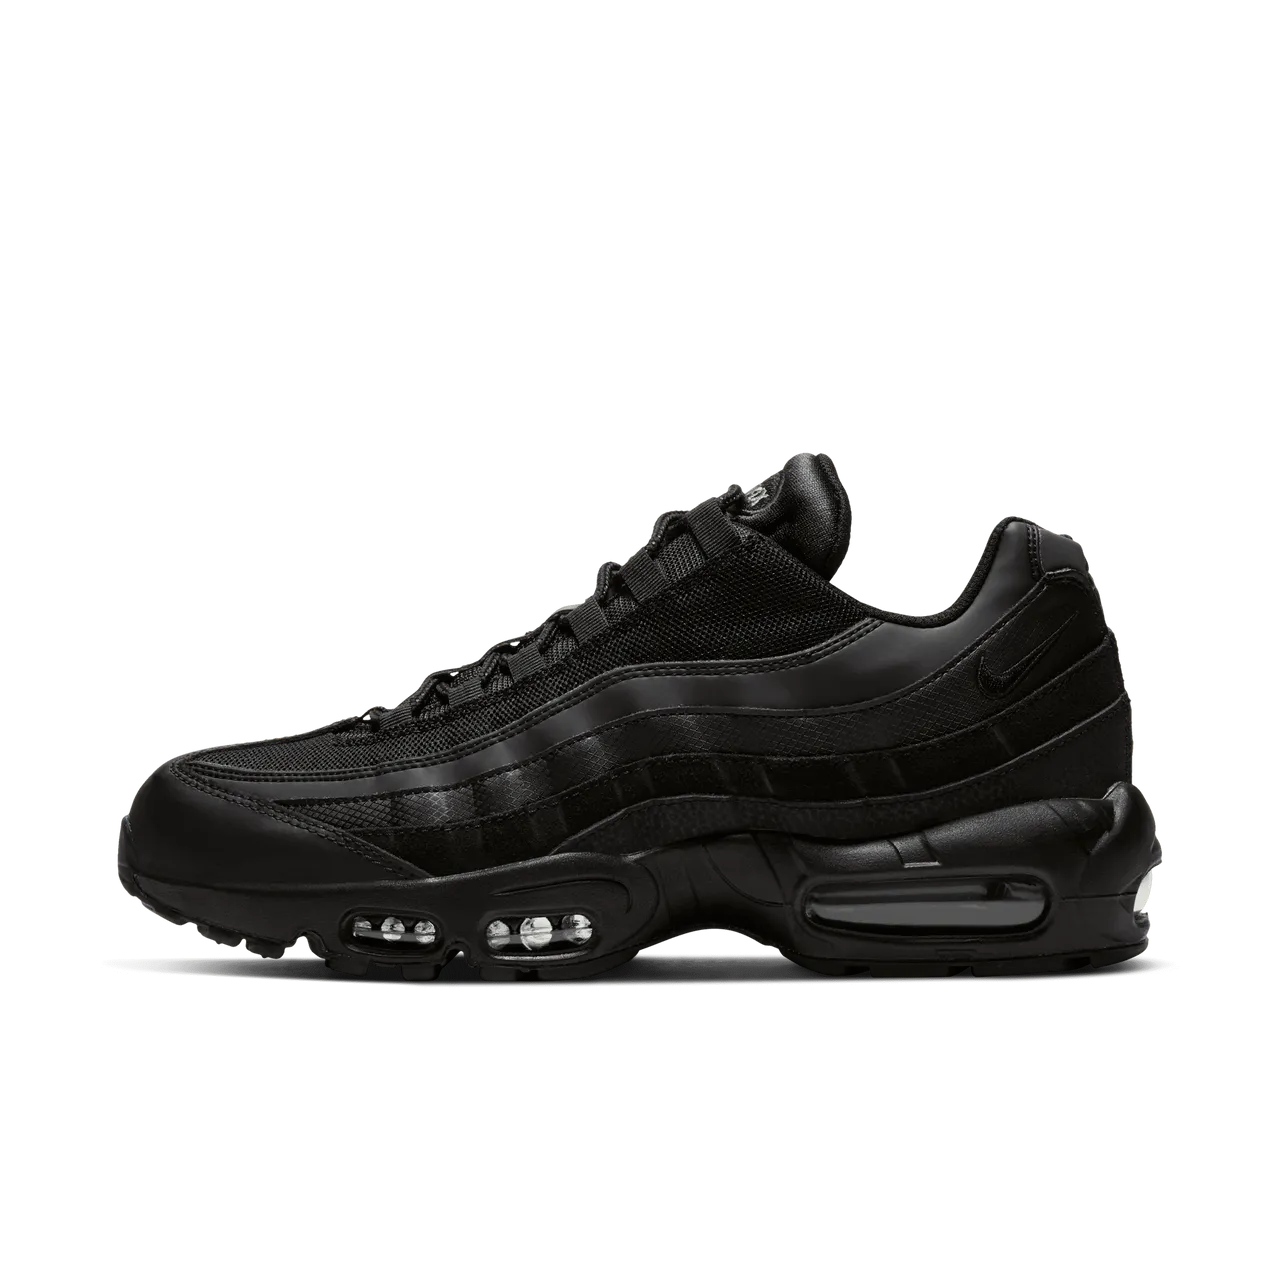 Nike Air Max 95 Essential Men's Shoe - Black